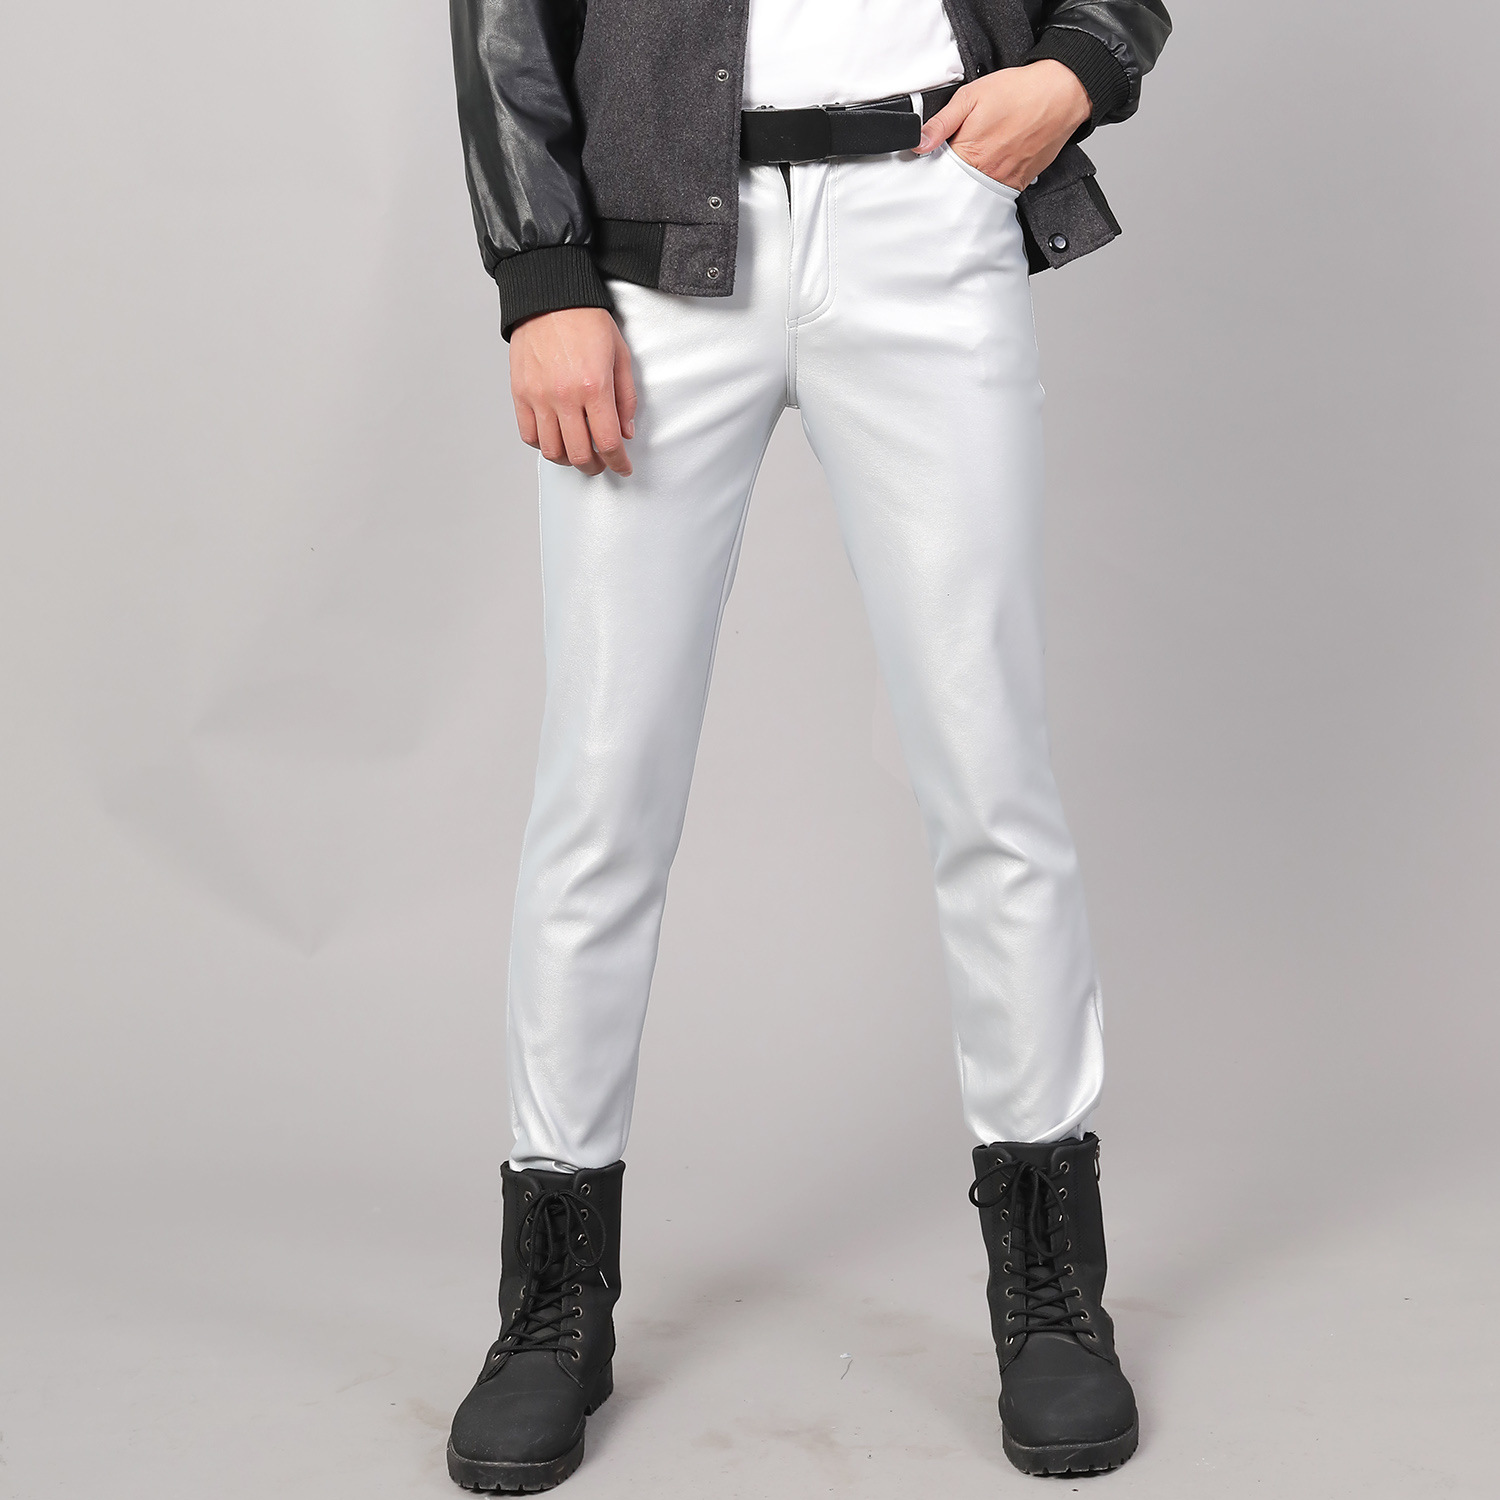 Stretch Slim Fashion Wetproof Leather Pants